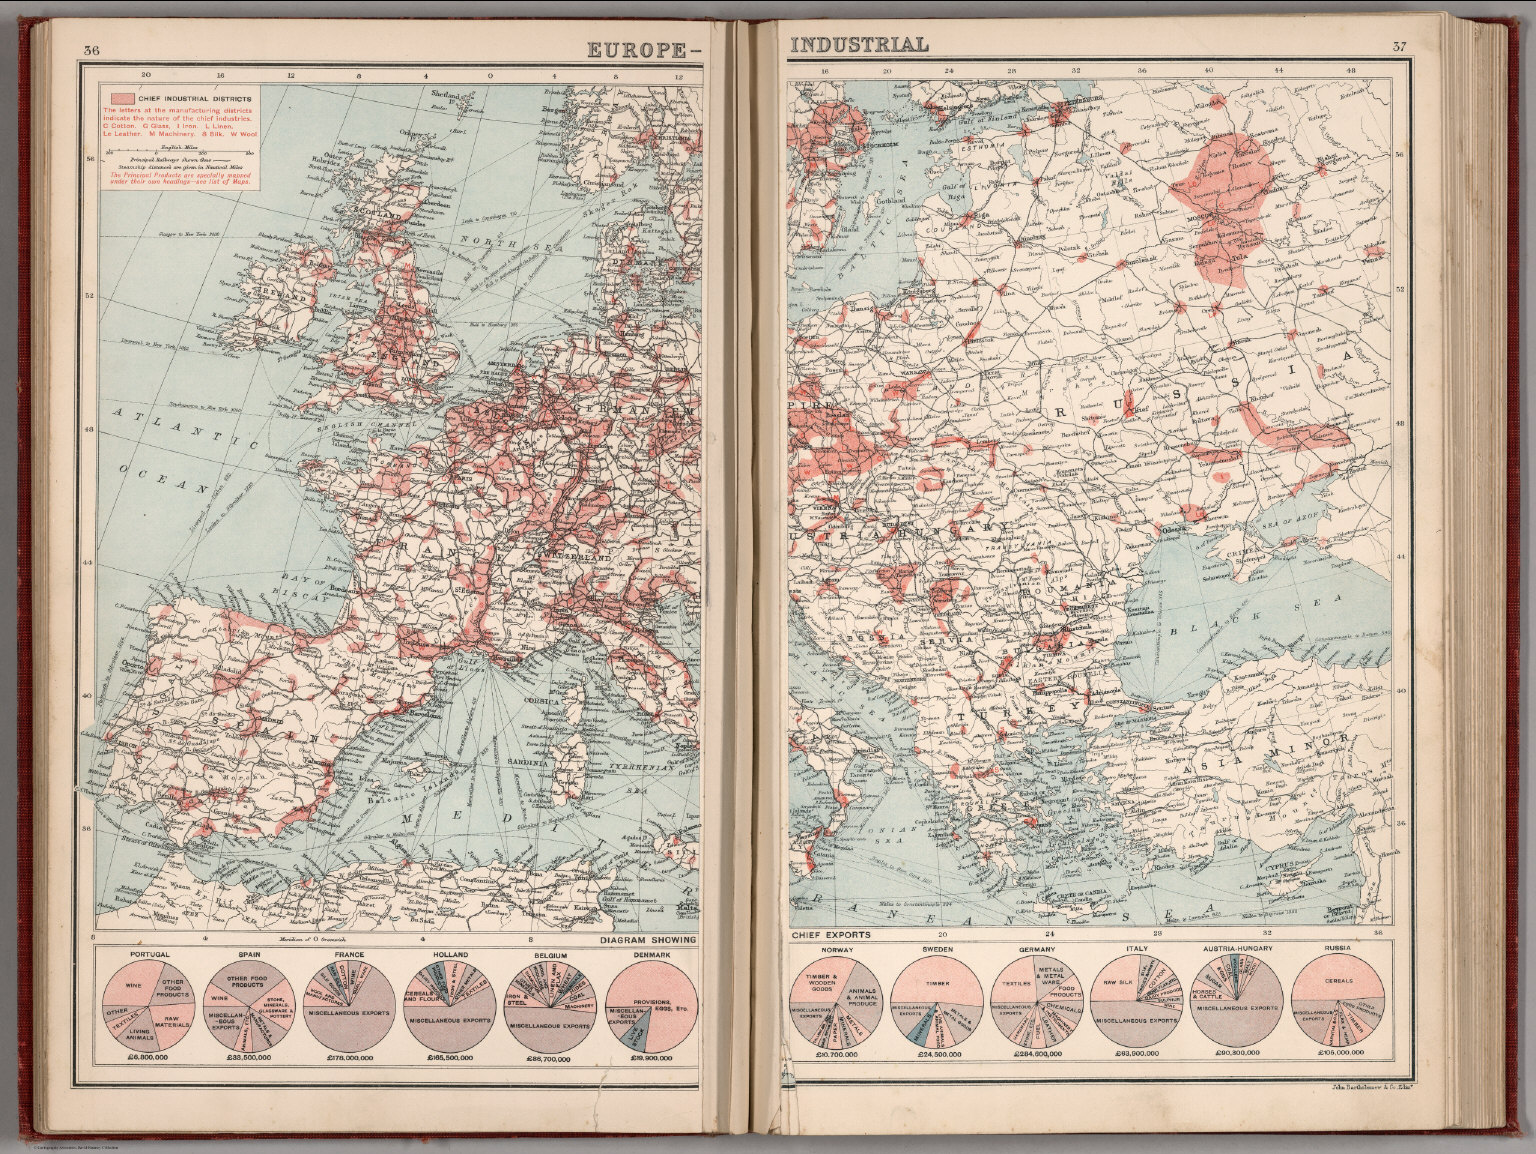 Europe - Industrial, 1907 (i distretti industriali europei dei primi del '900) autore: J. G. Bartholomew editore: George Newnes Limited (UK)